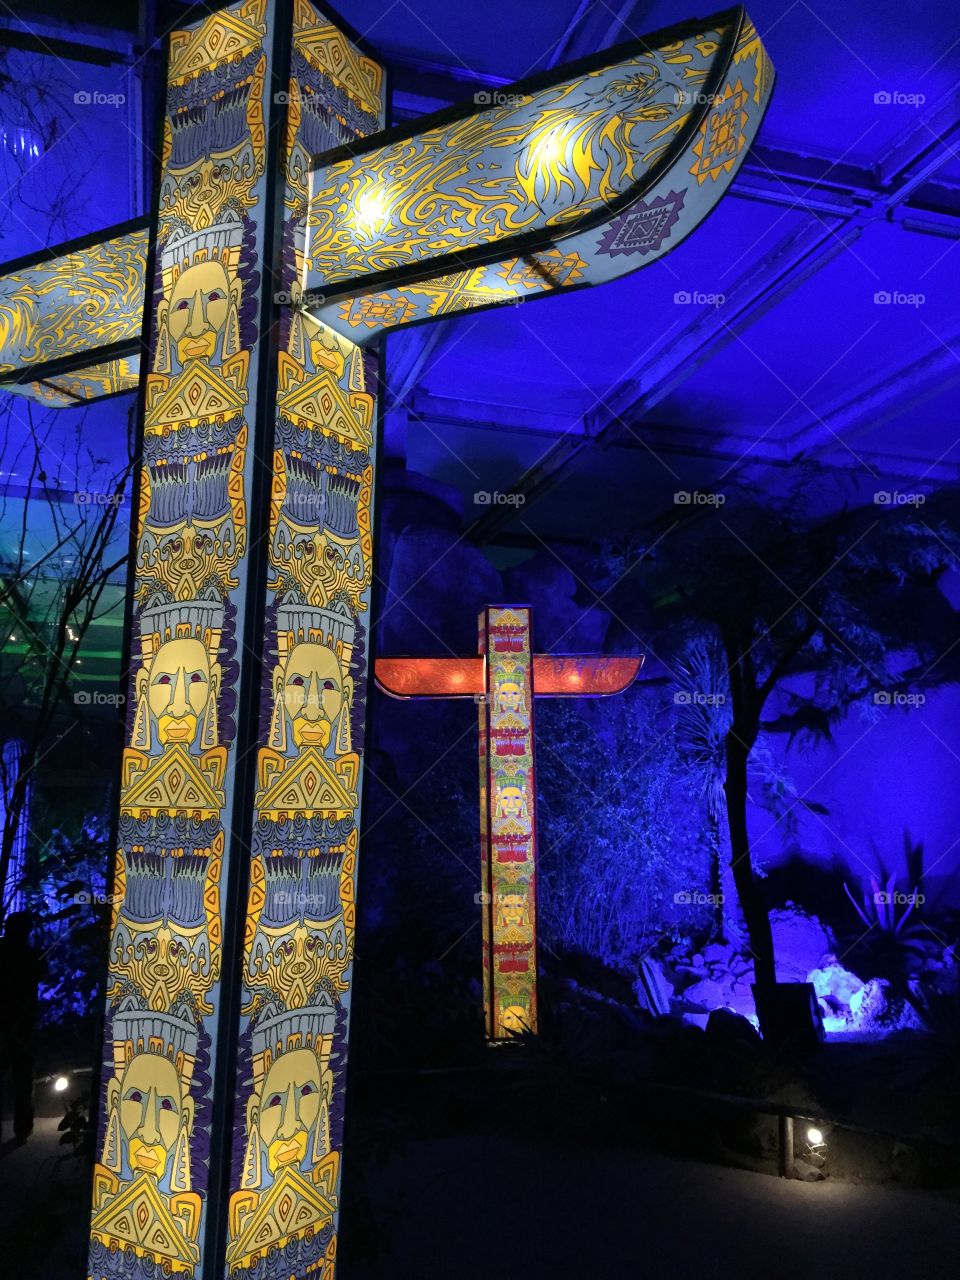 Illuminated totem poles